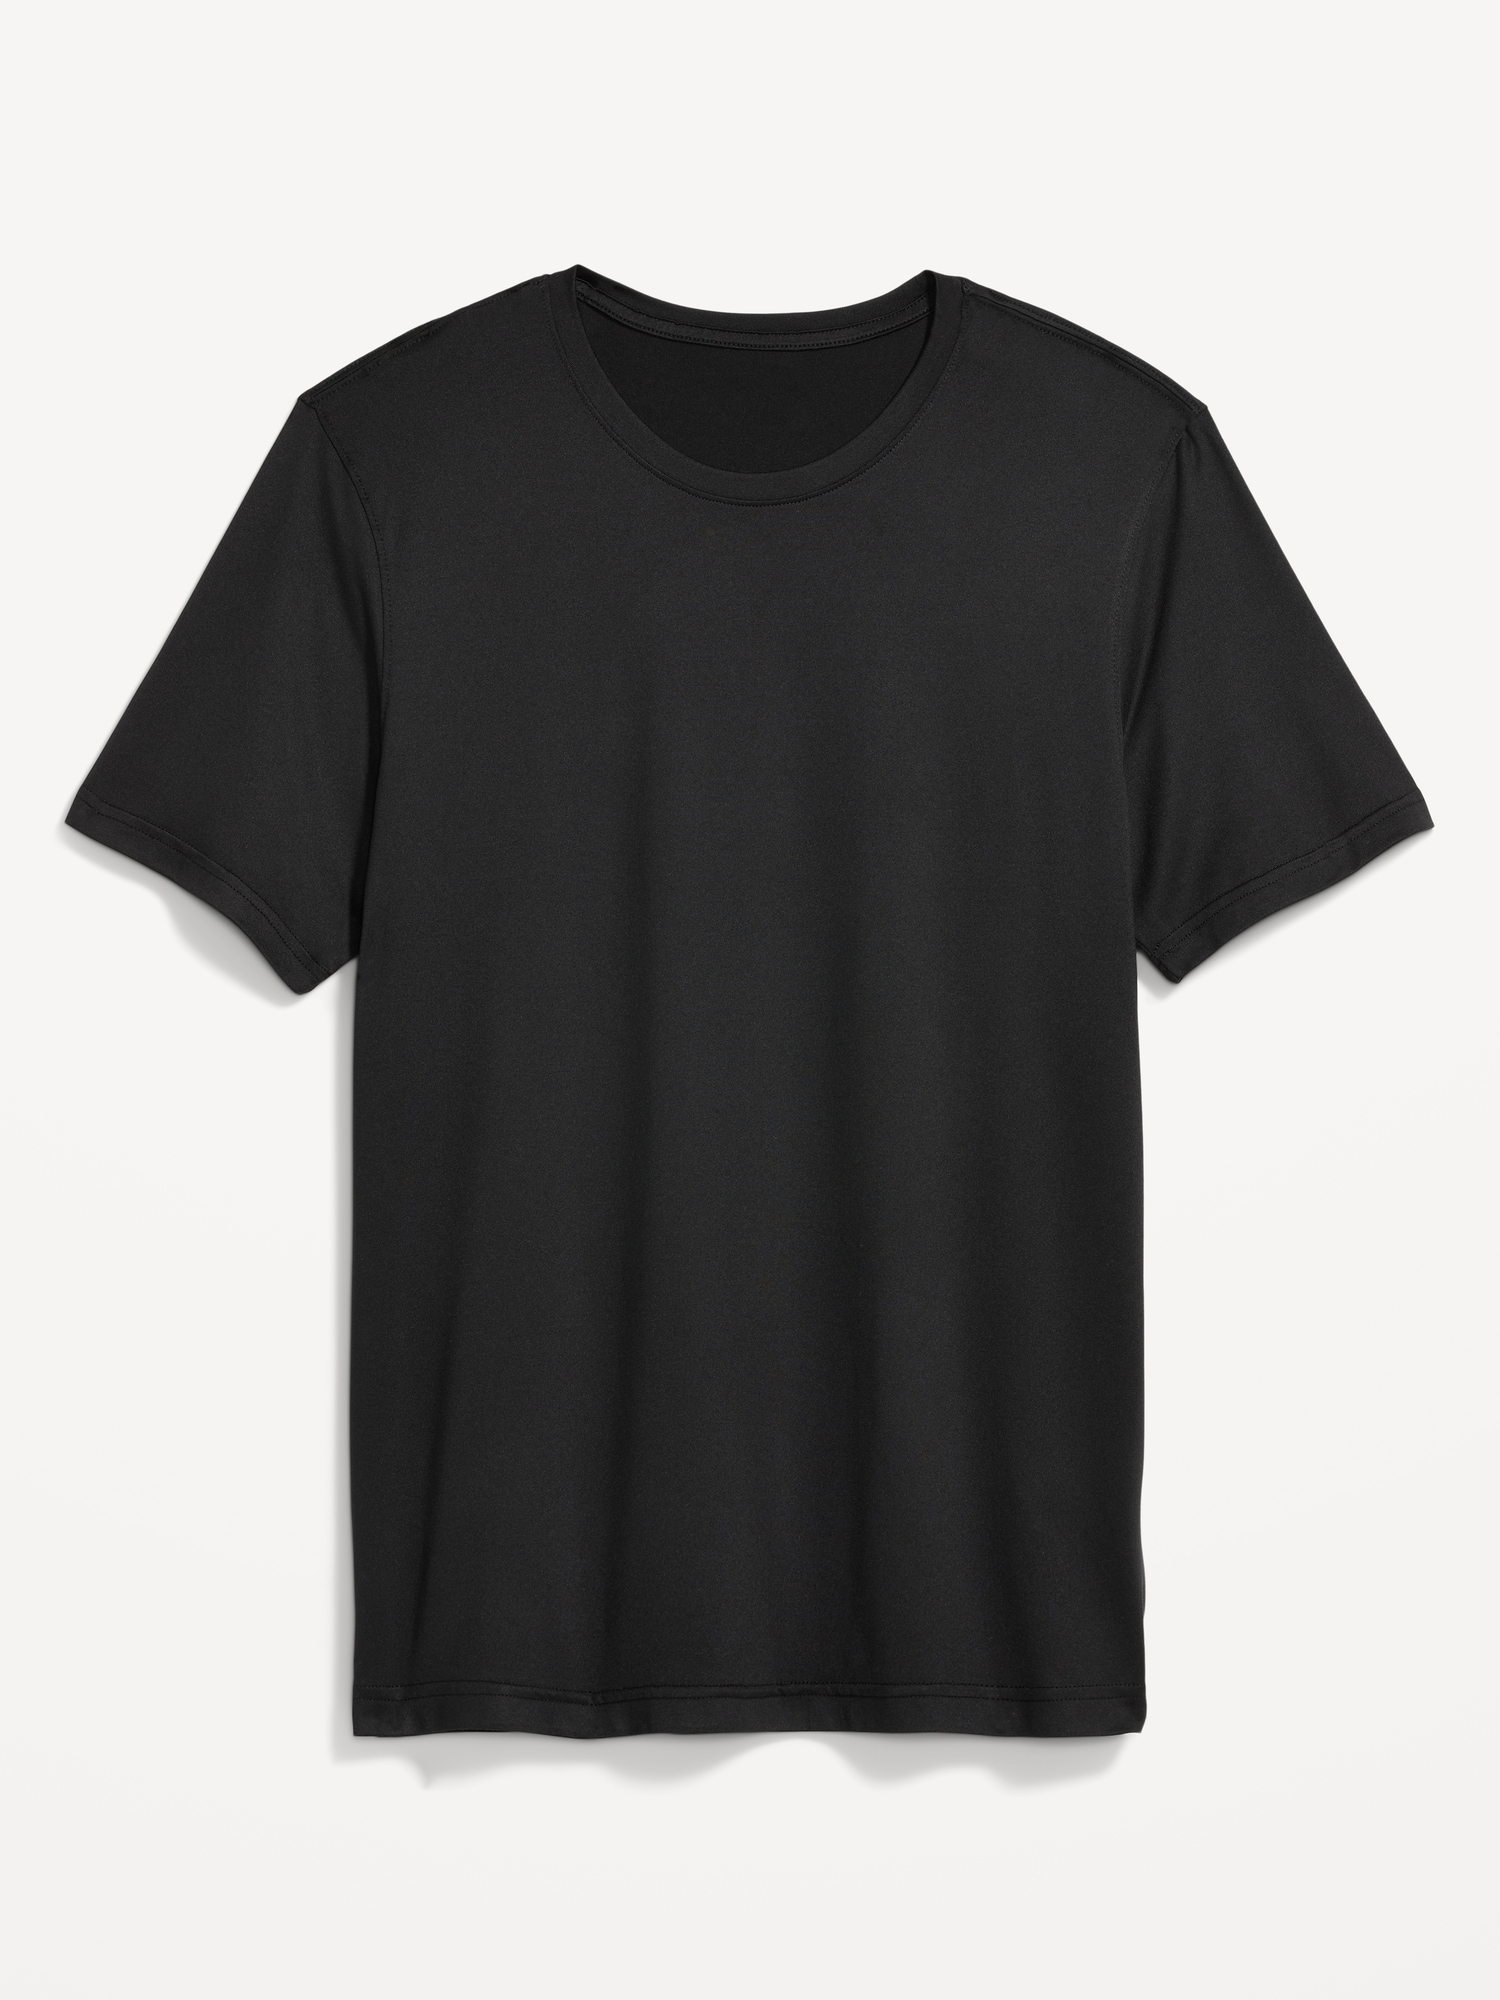 Cloud 94 Soft T-Shirt | Old Navy